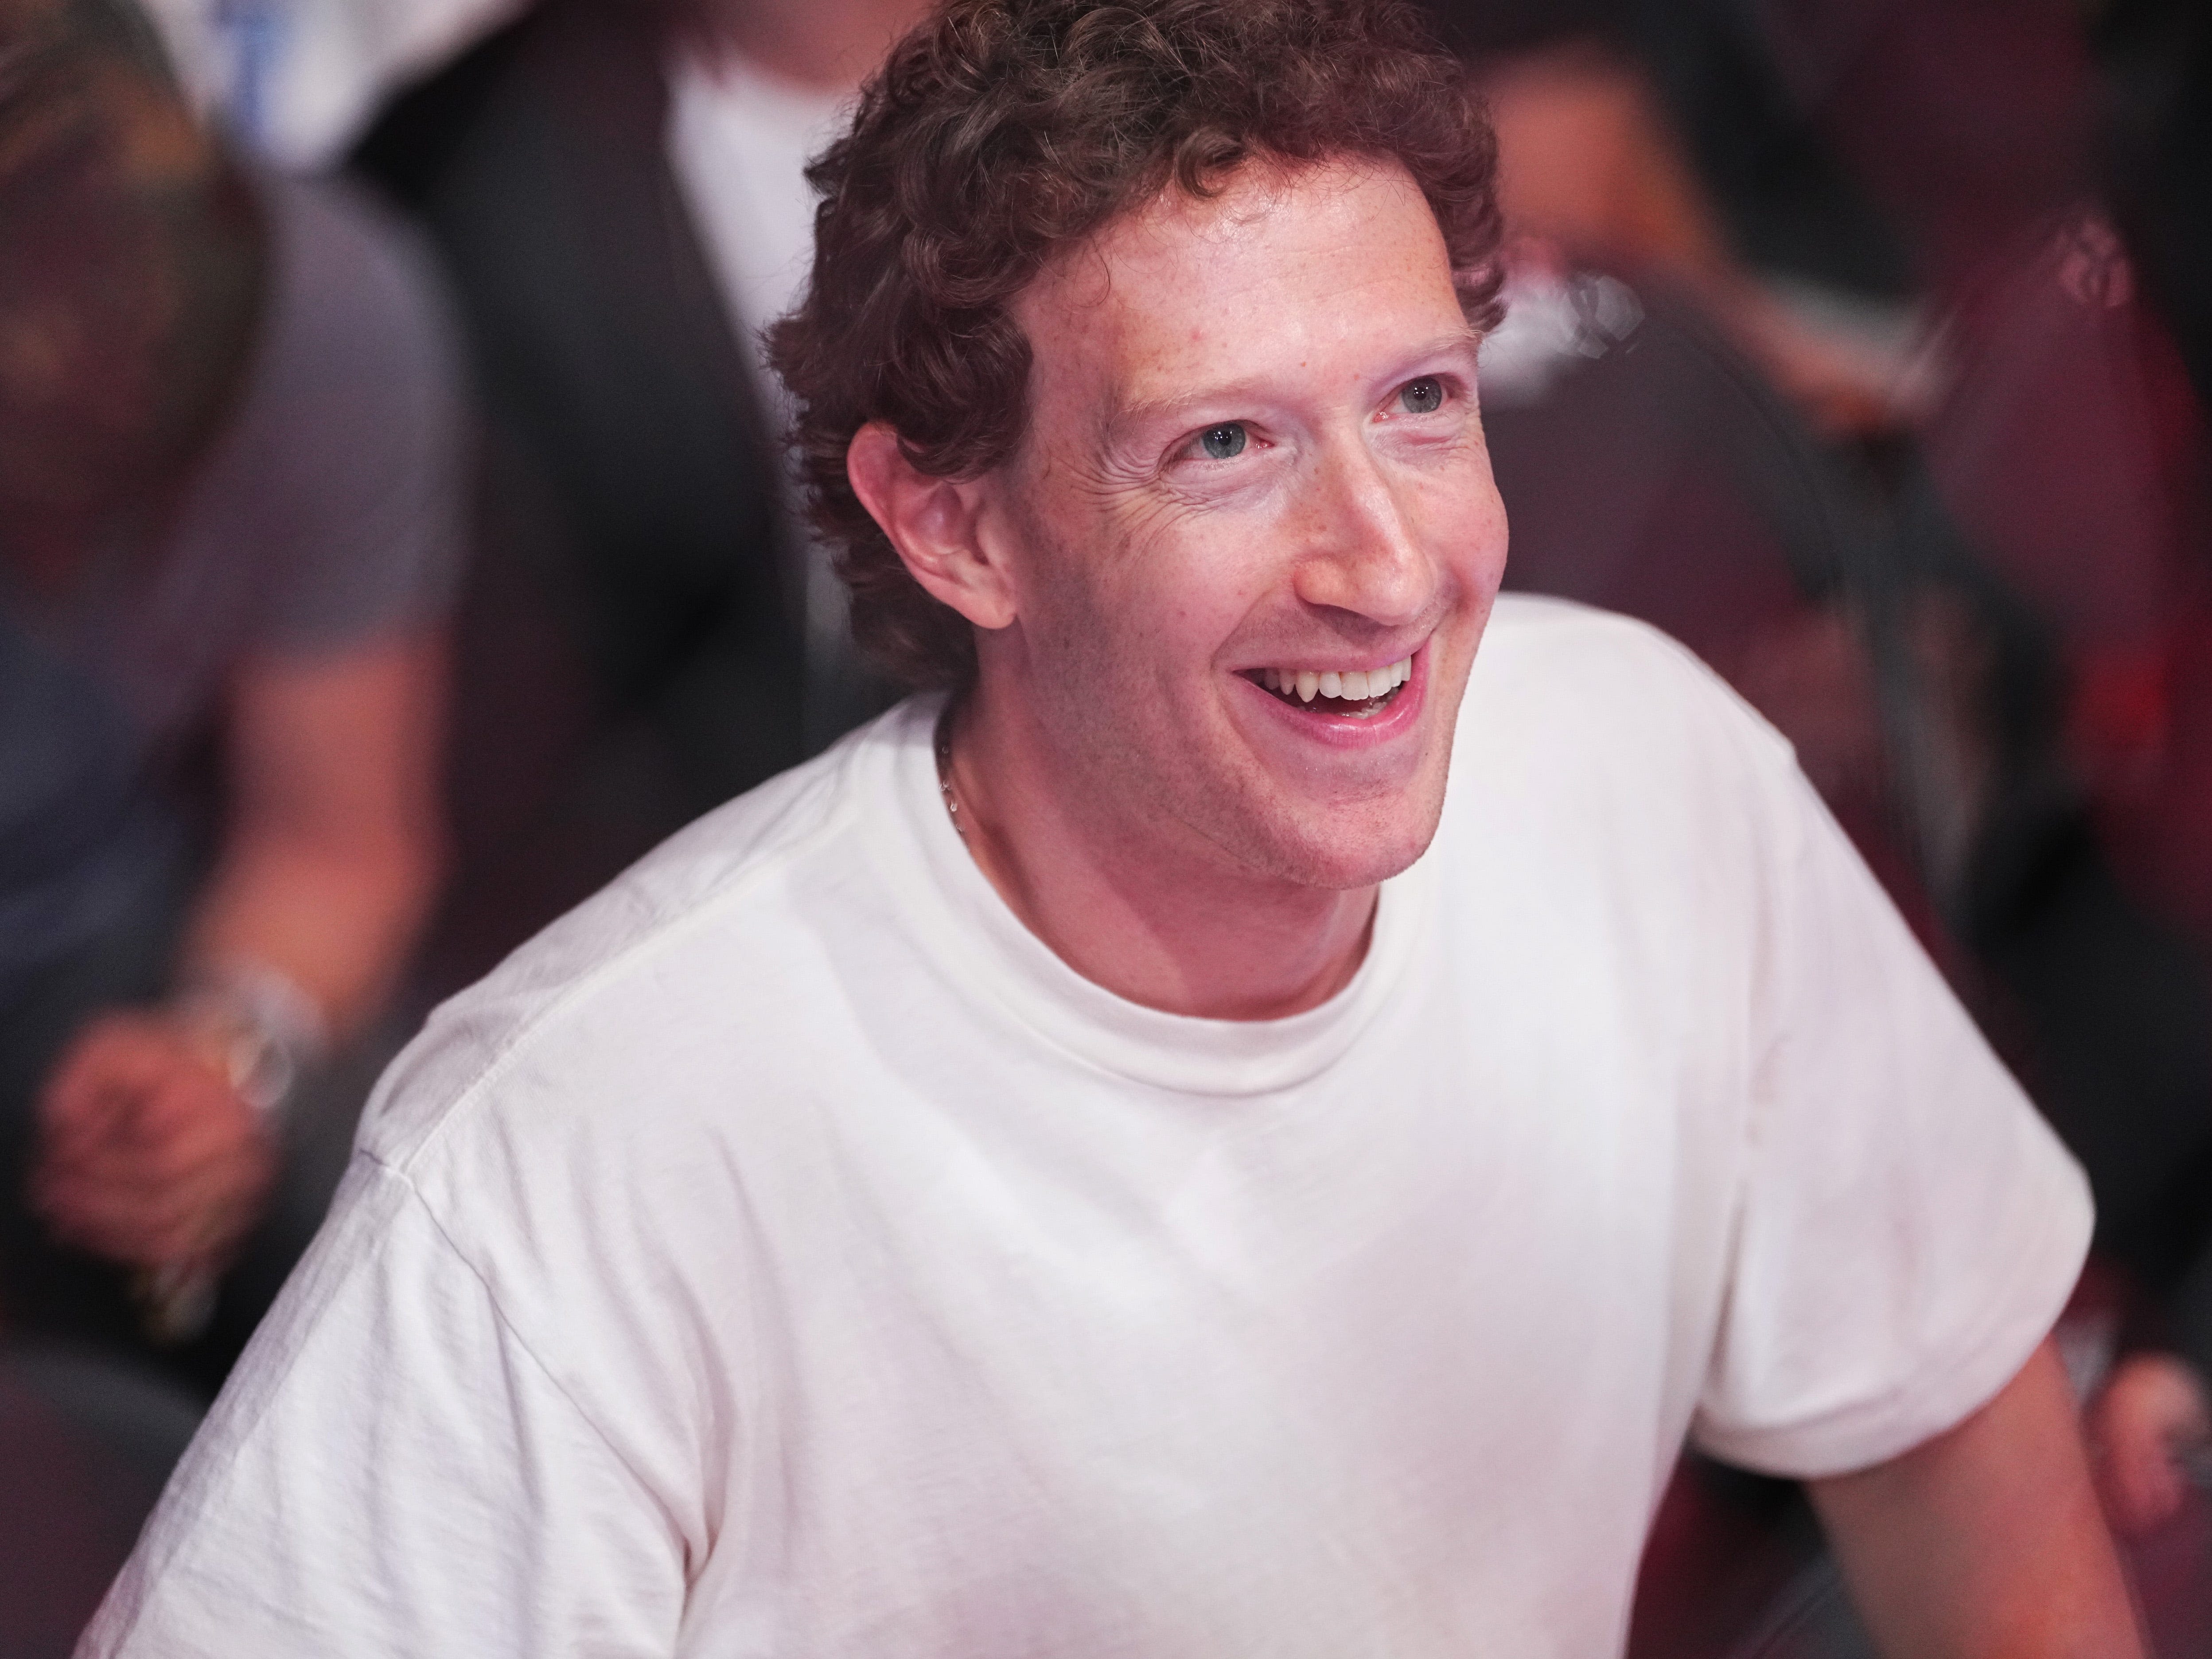 Meta shares plunge as Mark Zuckerberg's AI push spooks investors